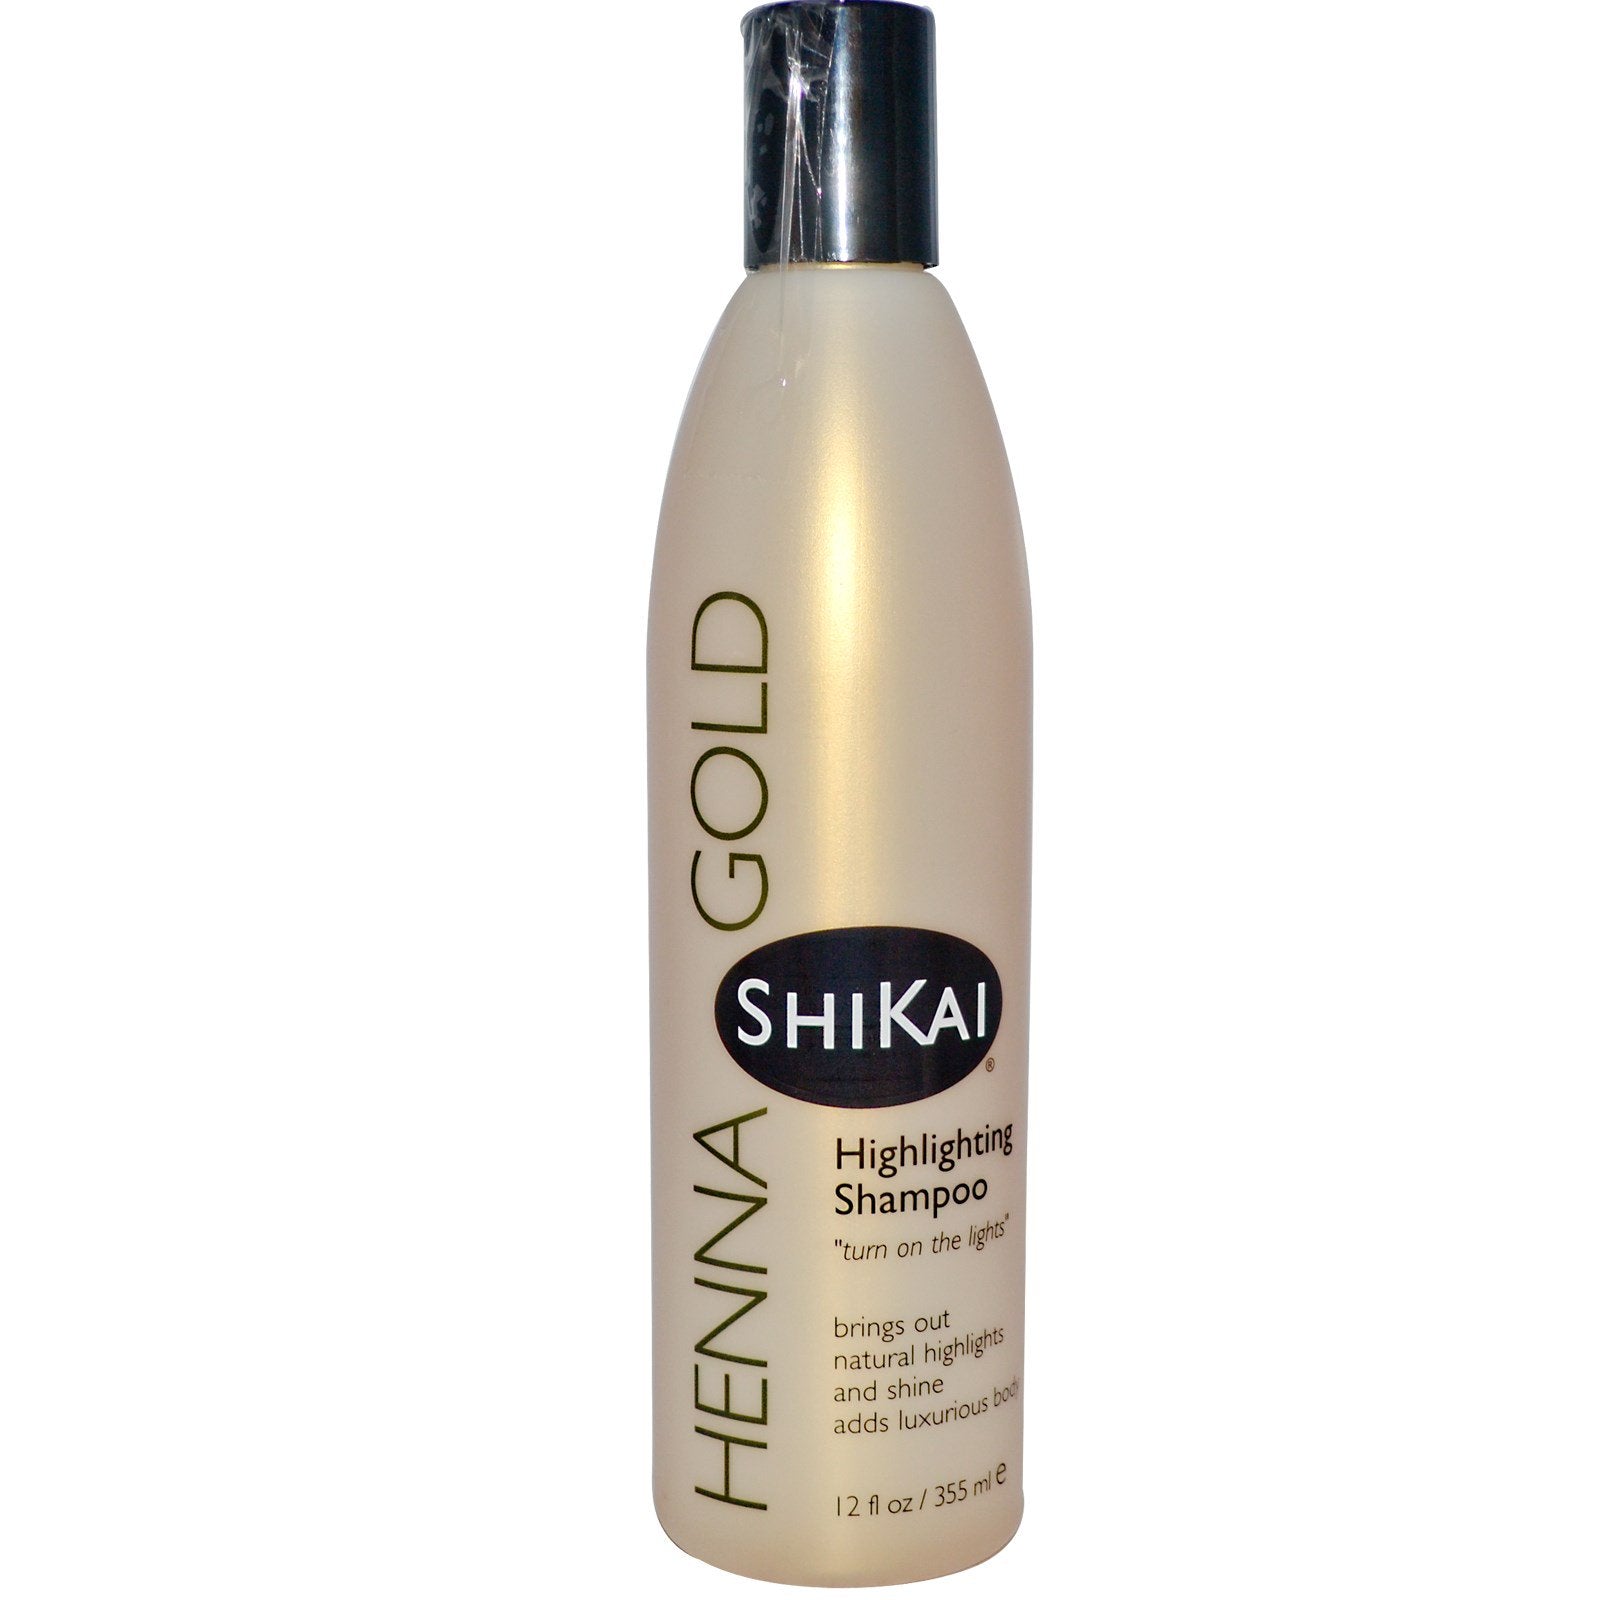 Shikai Highlighting Shampoo